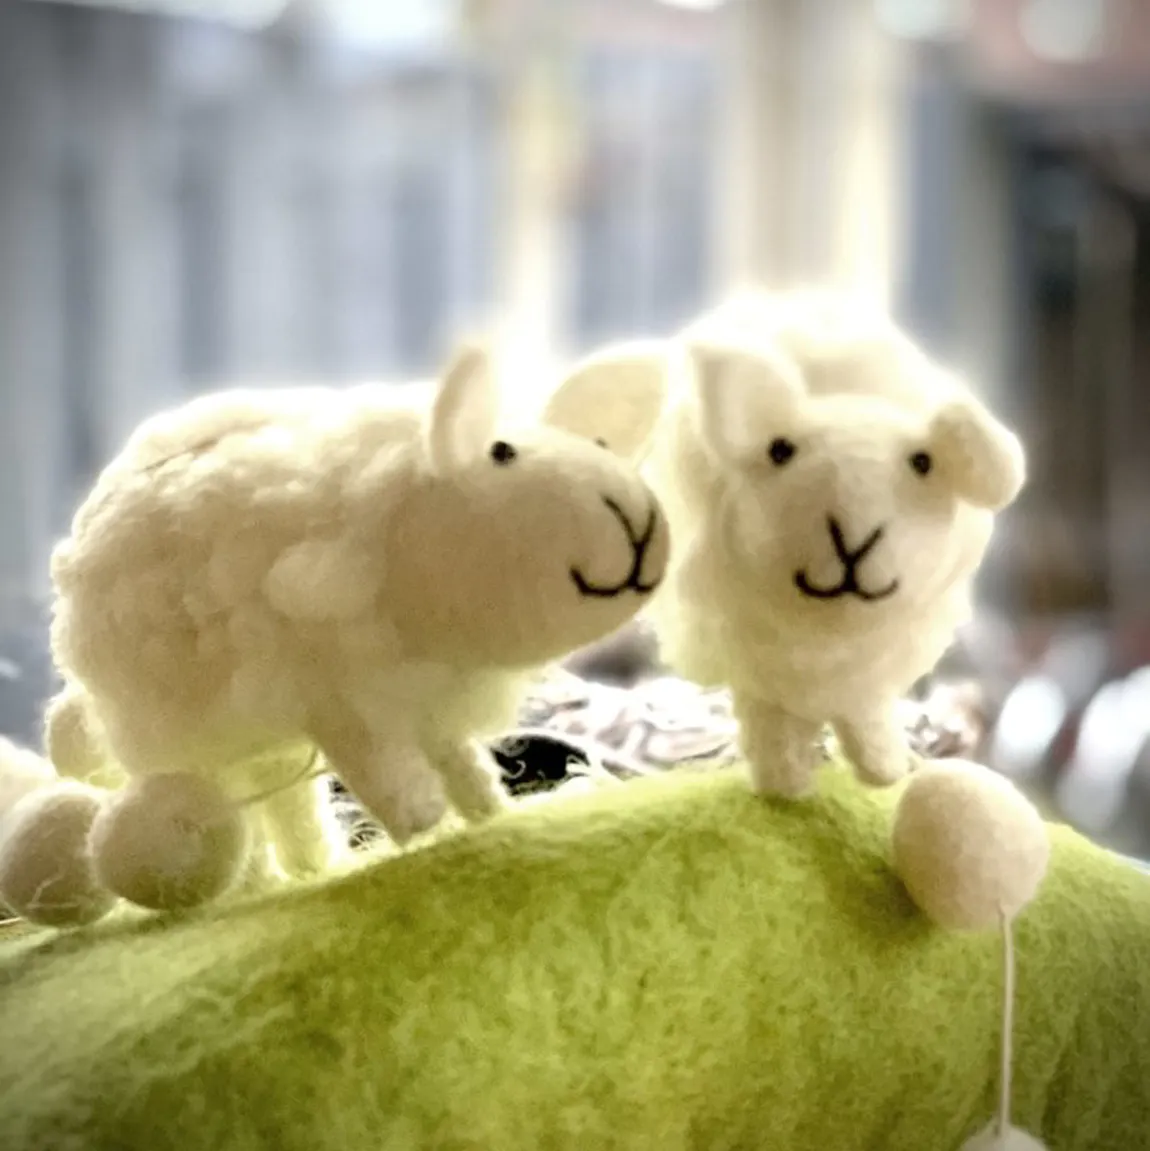 Mobile mouton